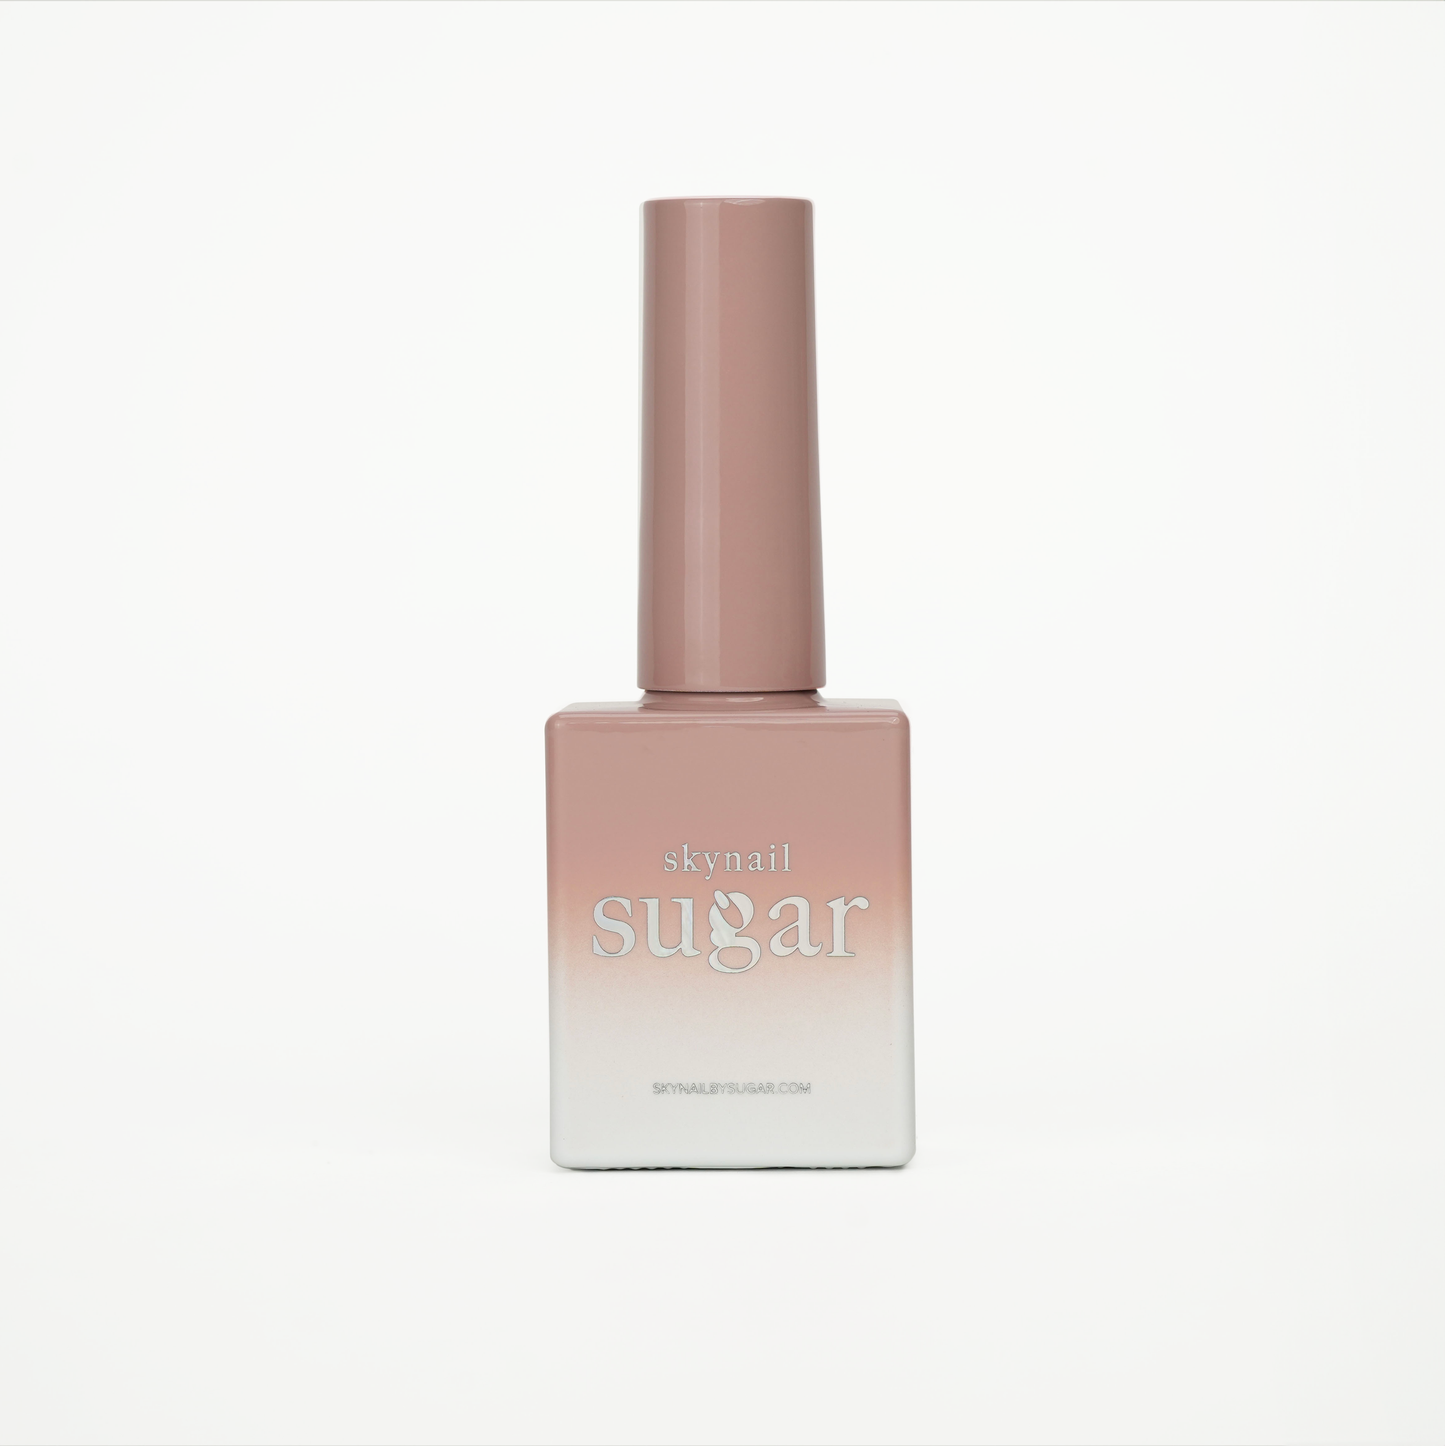 Bottle of syrup sn017 gel nail polish from Skynailbysugar